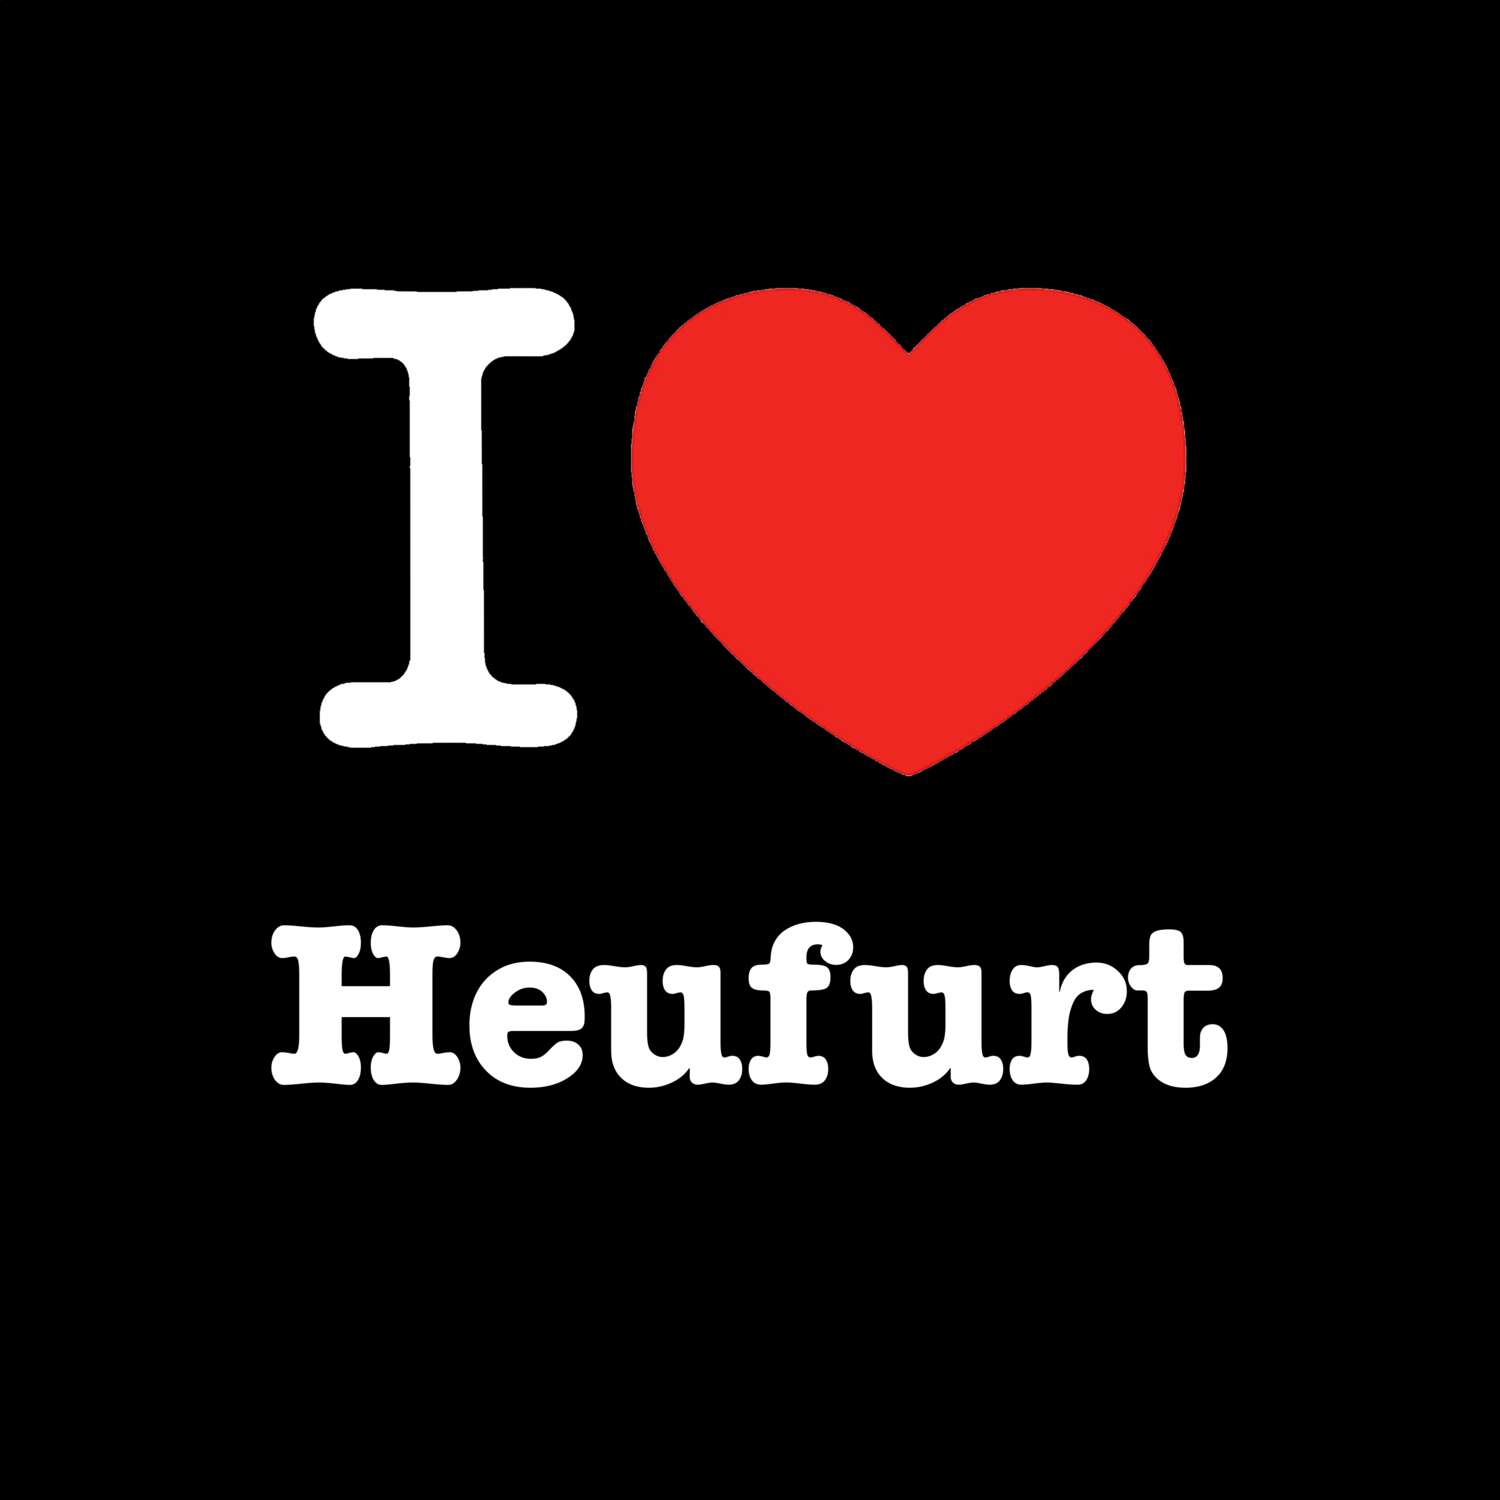 Heufurt T-Shirt »I love«